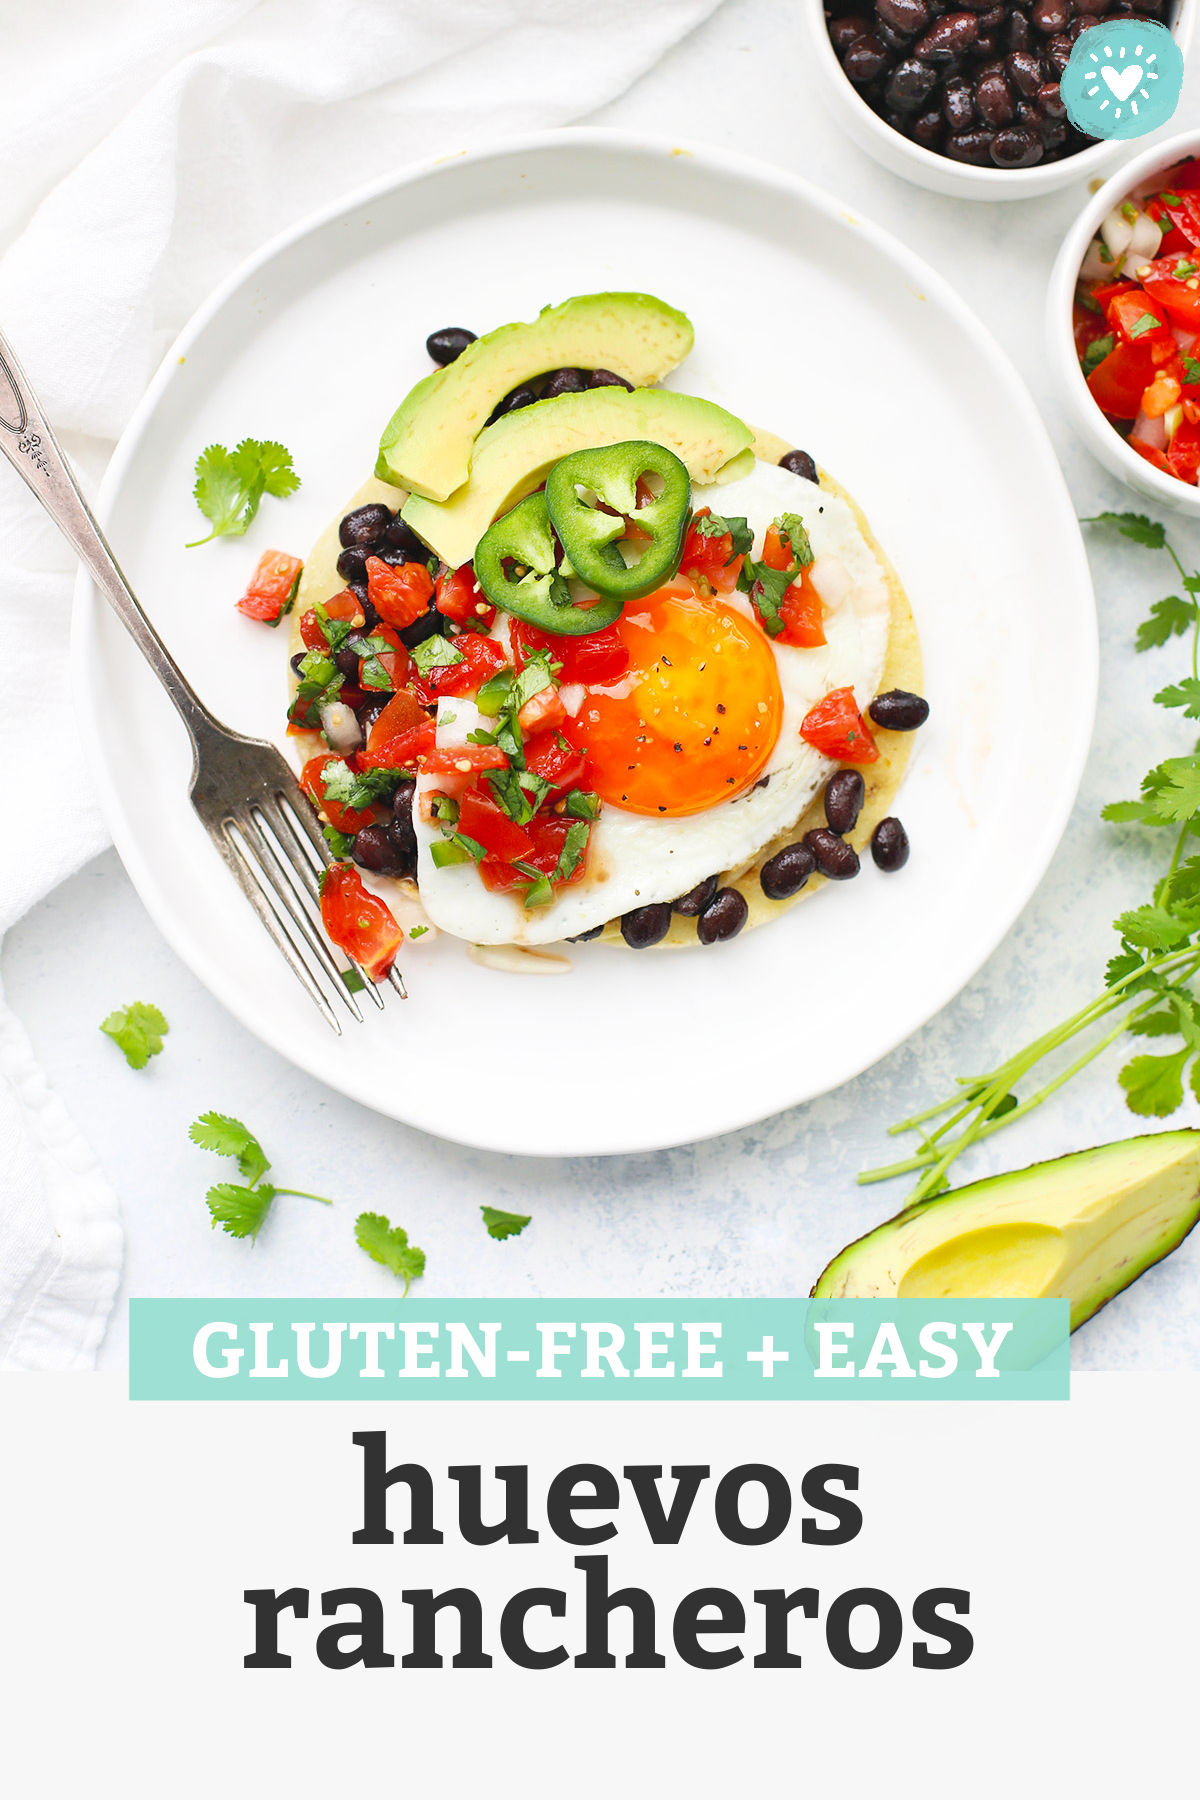 huevos rancheros on a white plate with fresh pico de gallo with text overlay that reads "gluten-free + easy huevos rancheros"